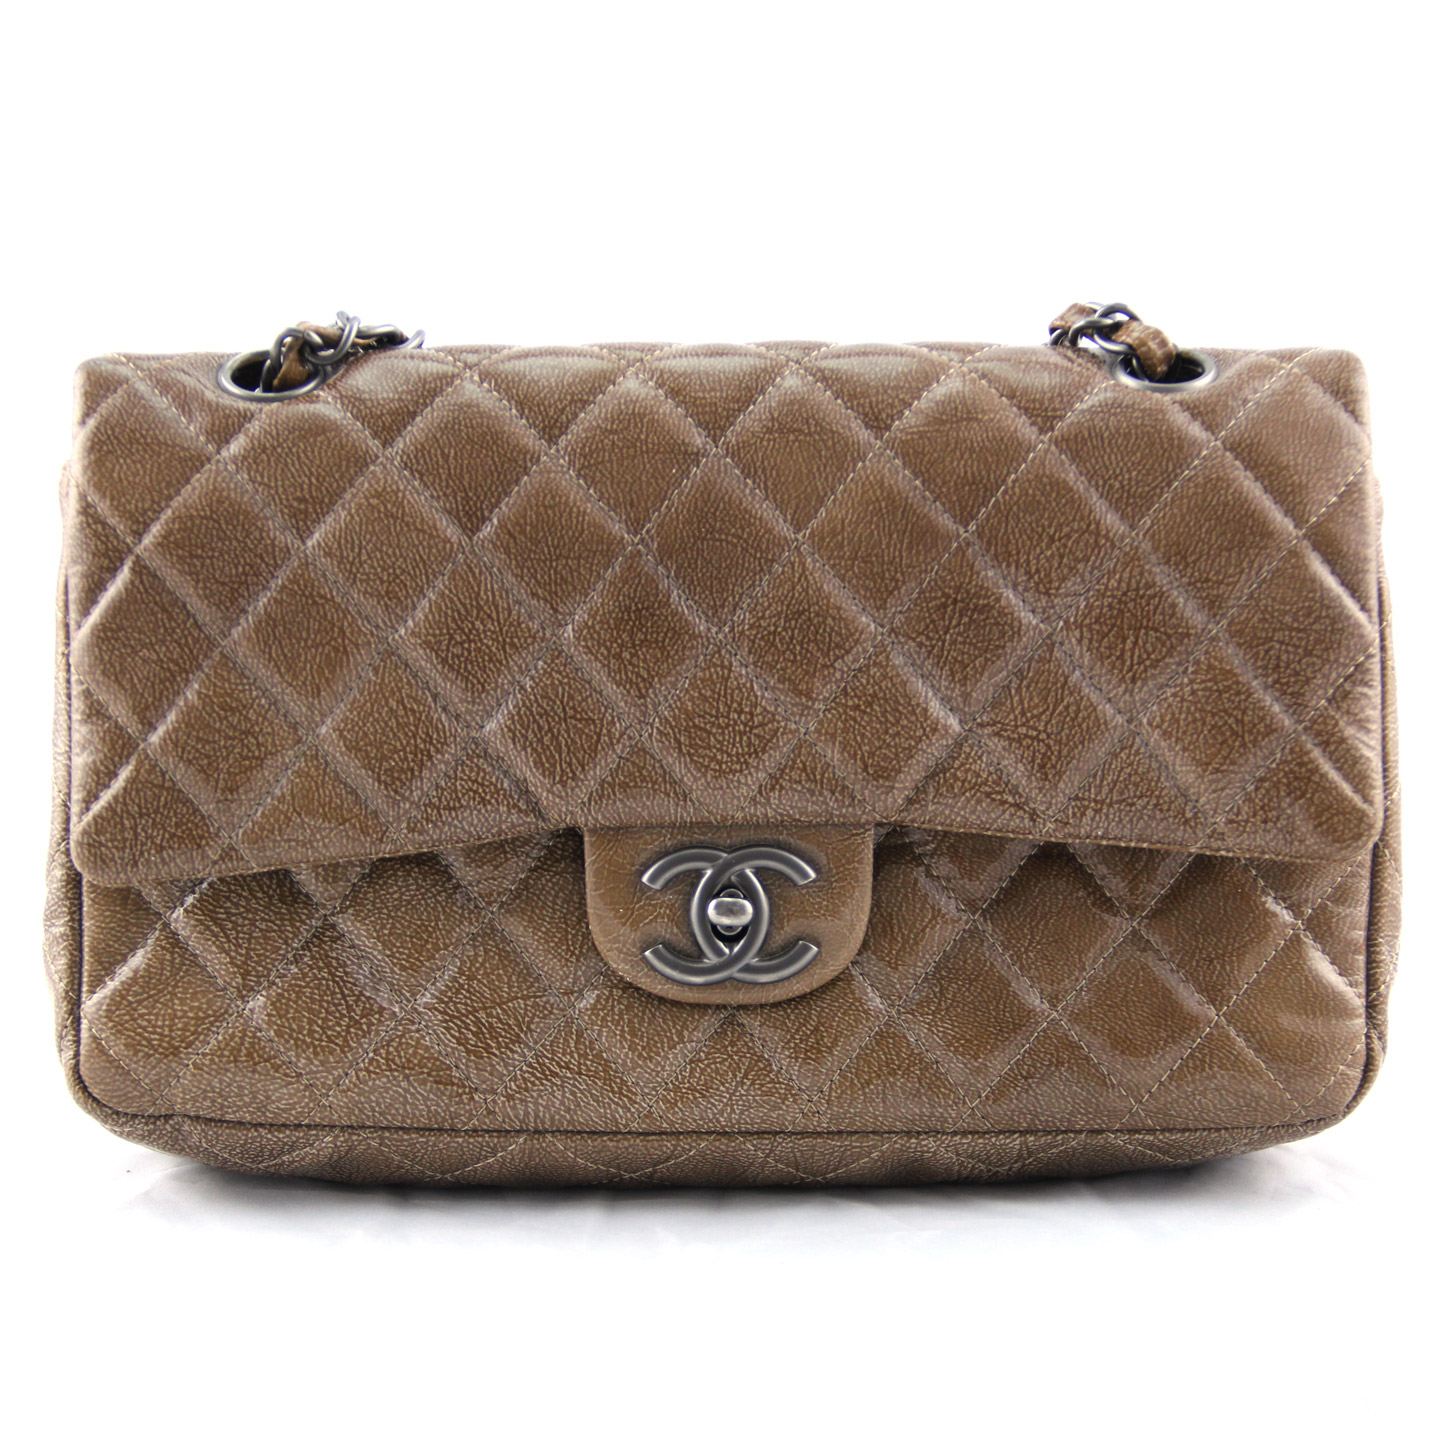 Best Way To Buy a Chanel Handbag  How to auction a designer handbag